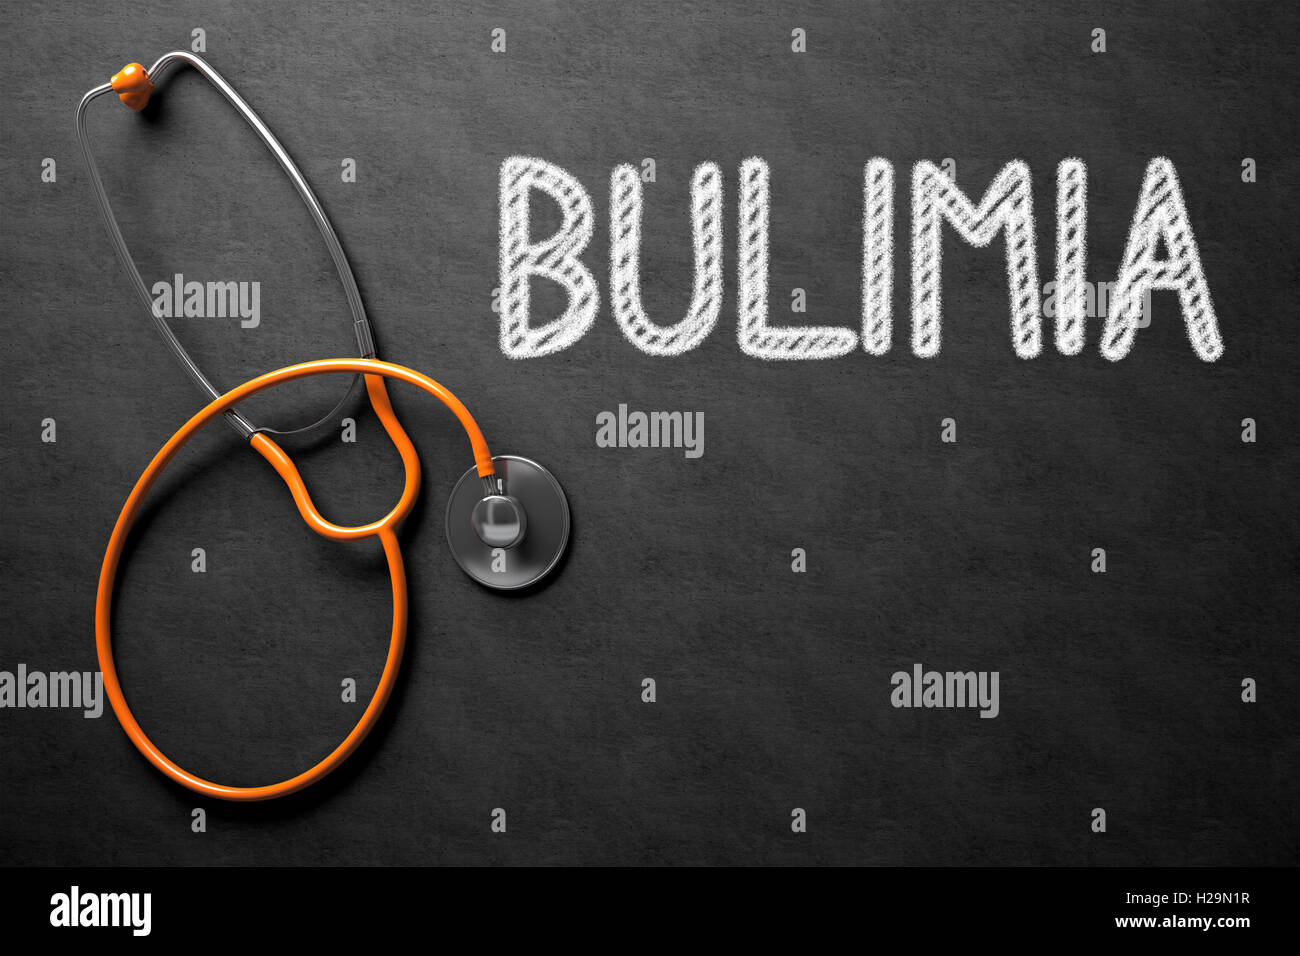 Bulimia - Text on Chalkboard. 3D Illustration. Stock Photo